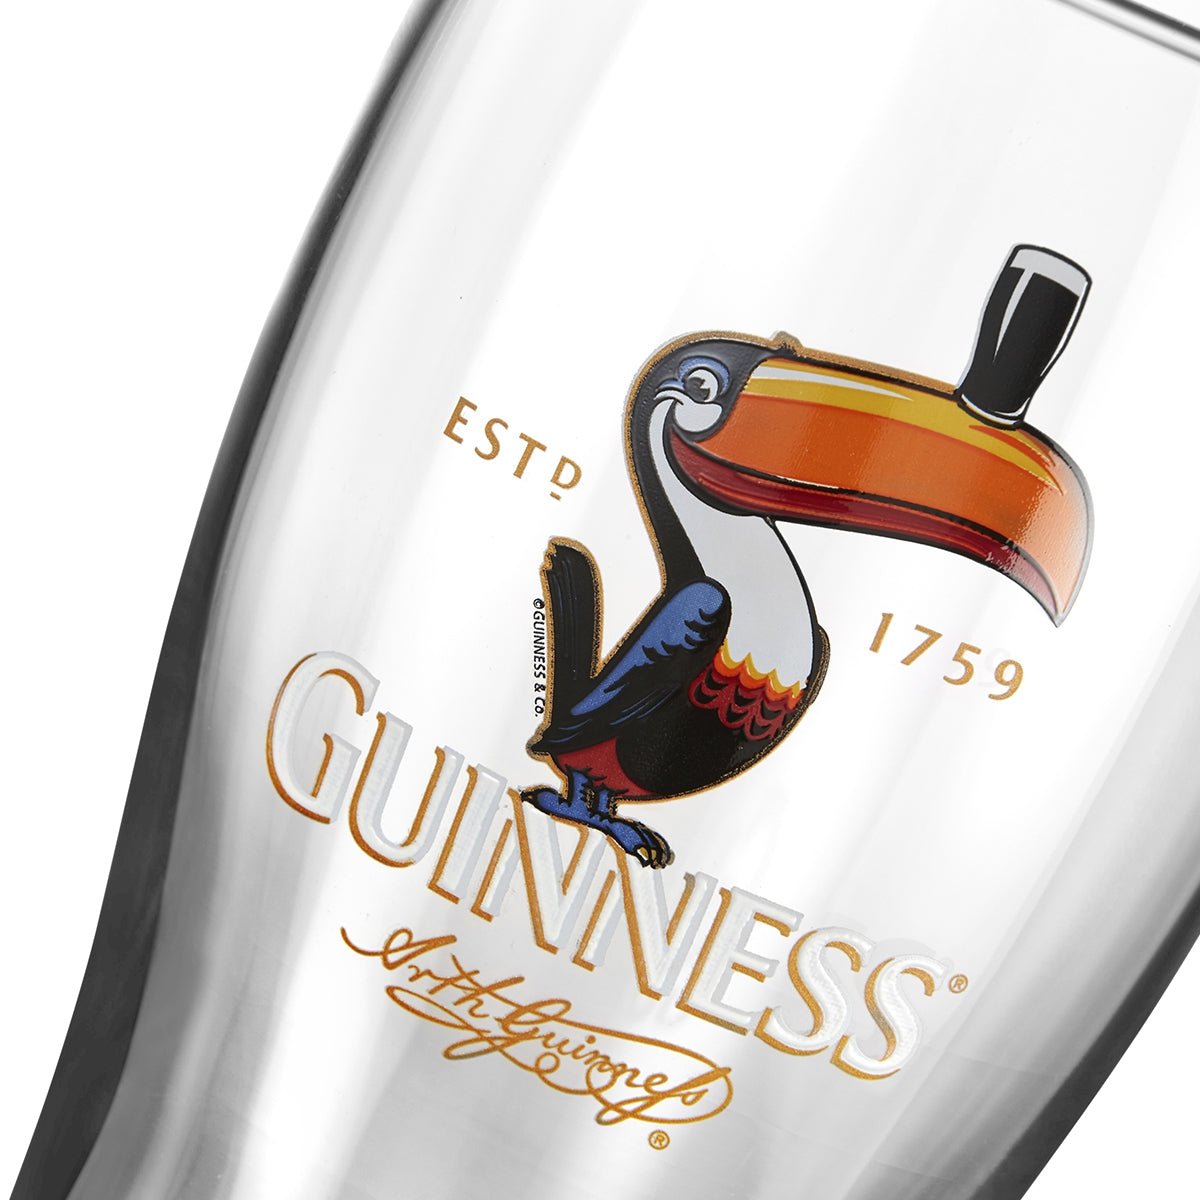 Guinness Blonde Pint Glass – Funky Skunk